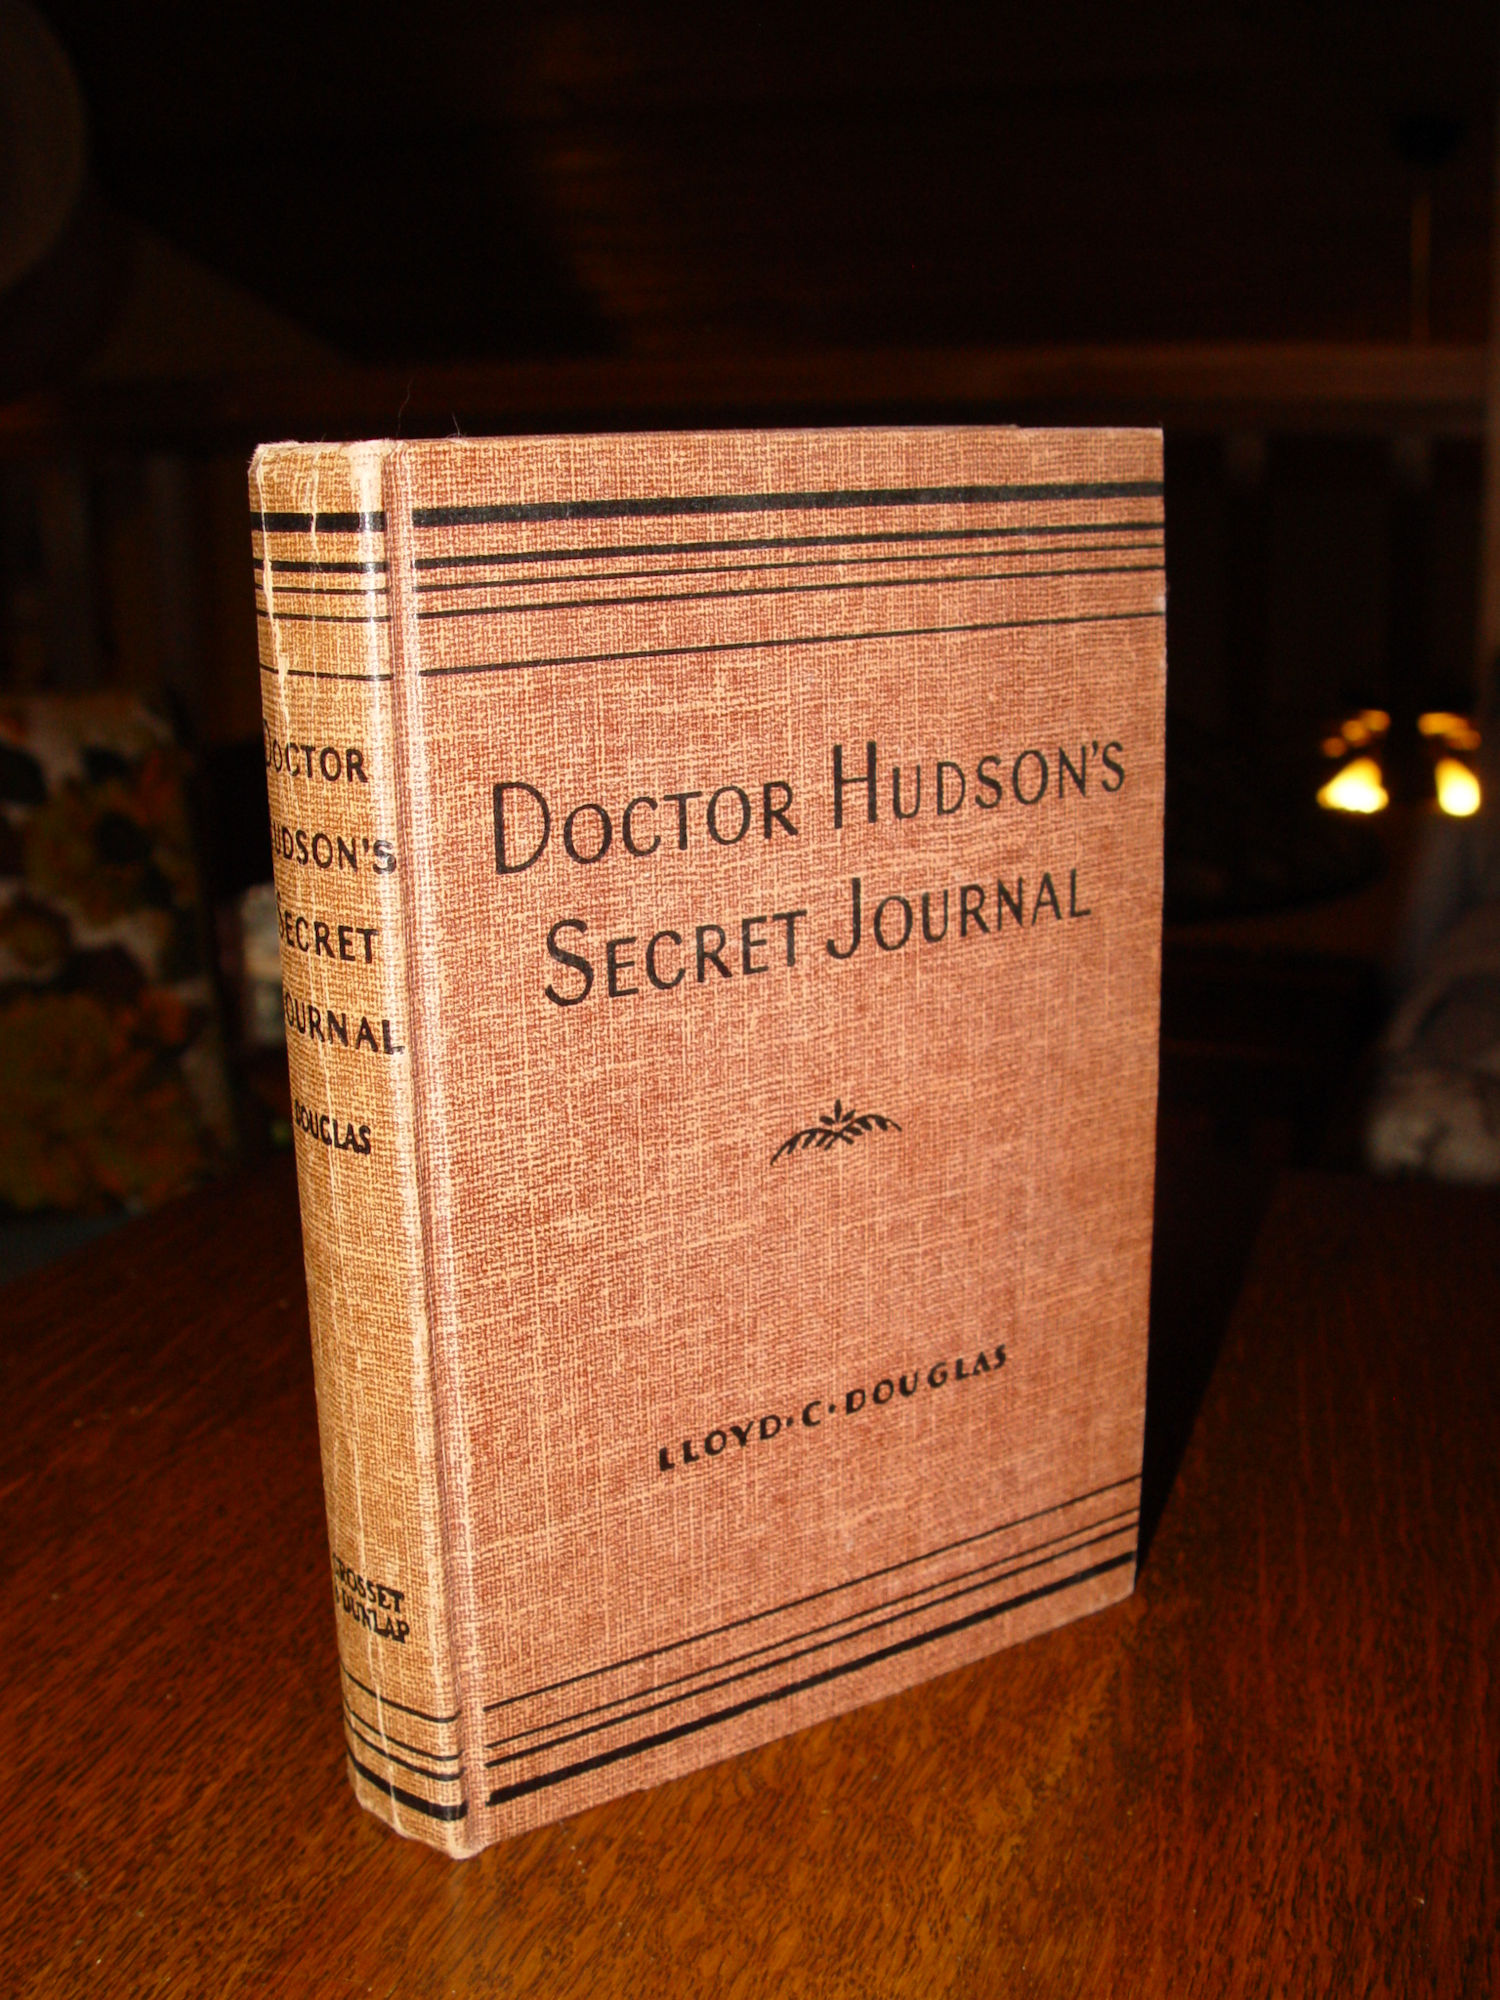 Doctor Hudson's Secret Journal 1939 by
                        Lloyd Douglas